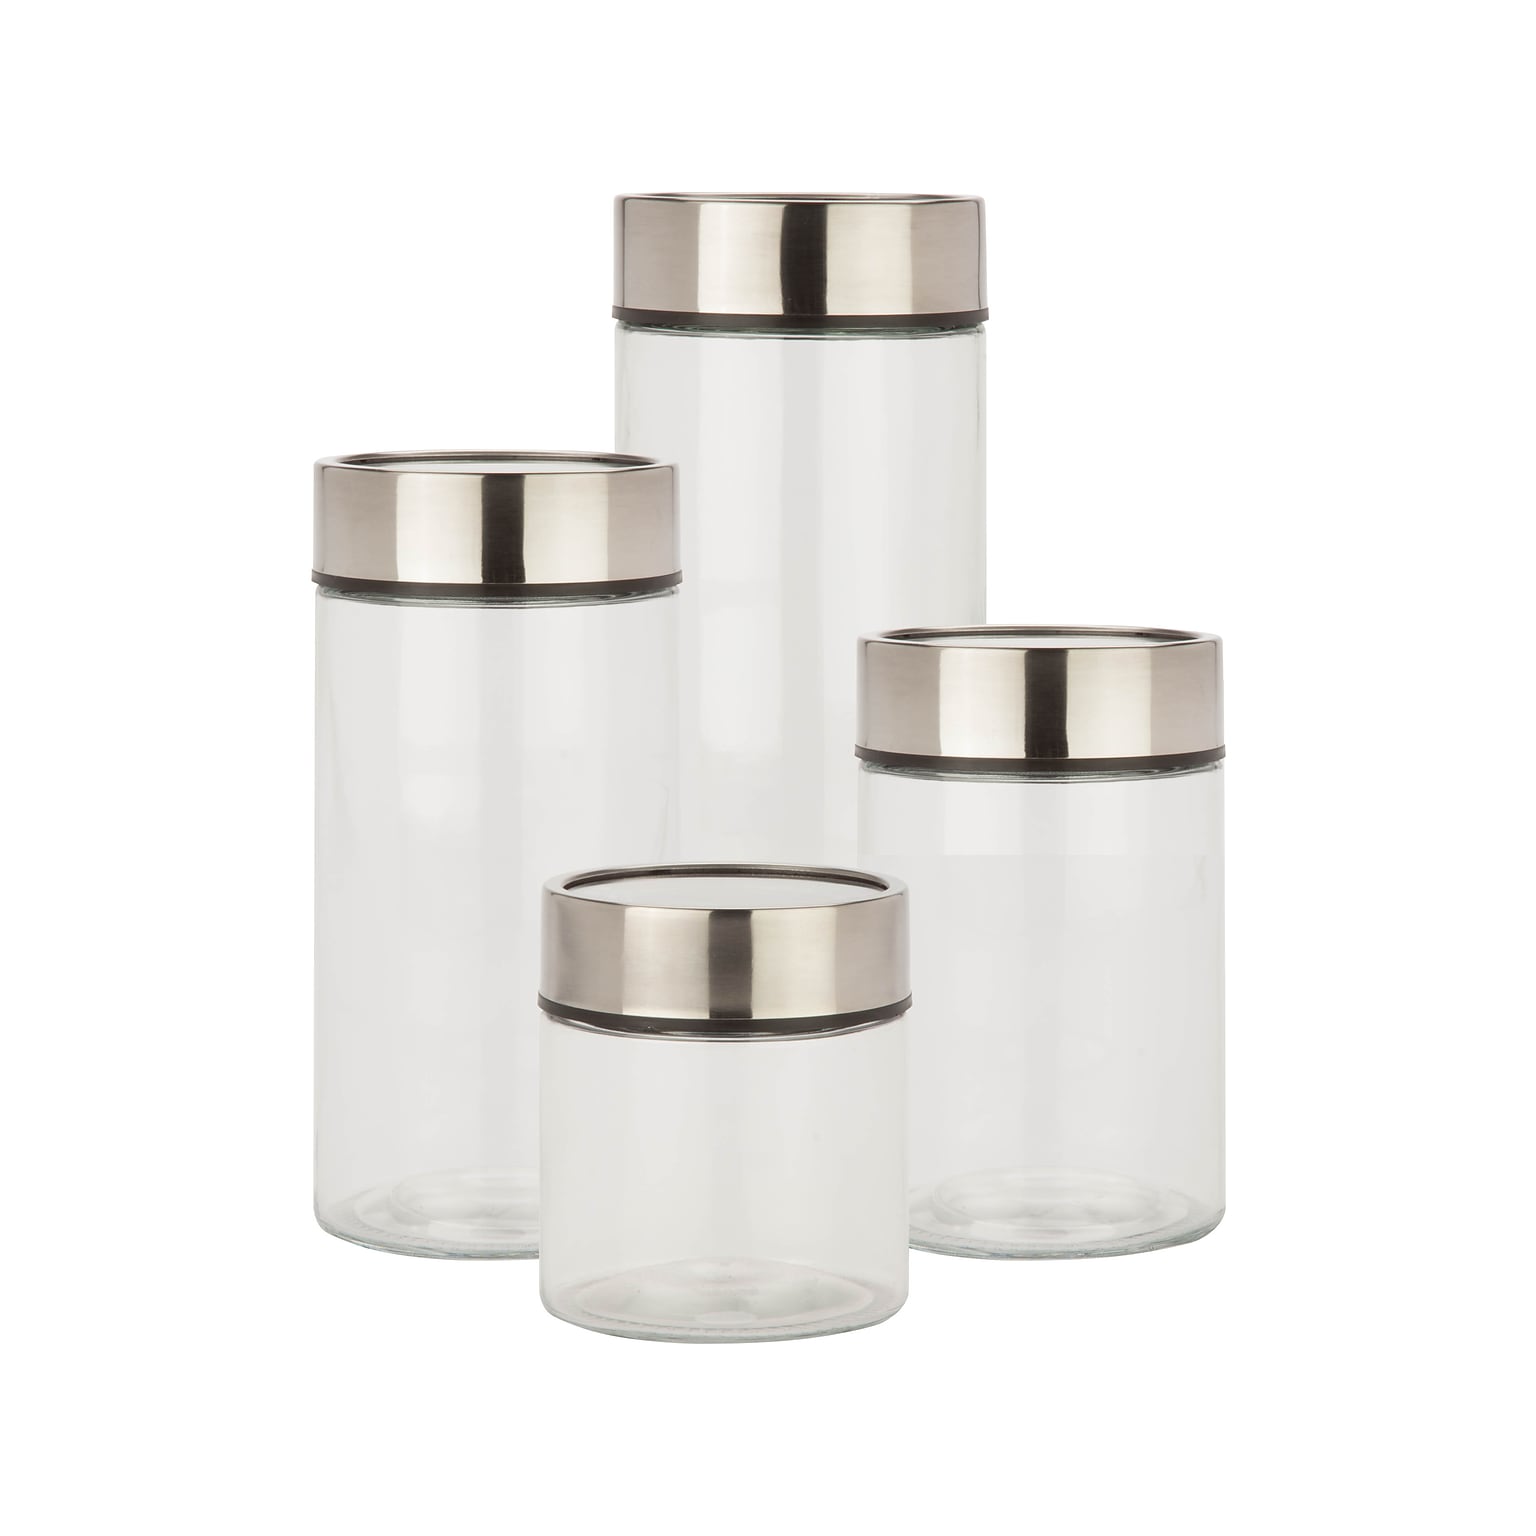 Honey-Can-Do Glass/Stainless Steel 4-Piece Jar Set, Clear/Silver (KCH-09644)